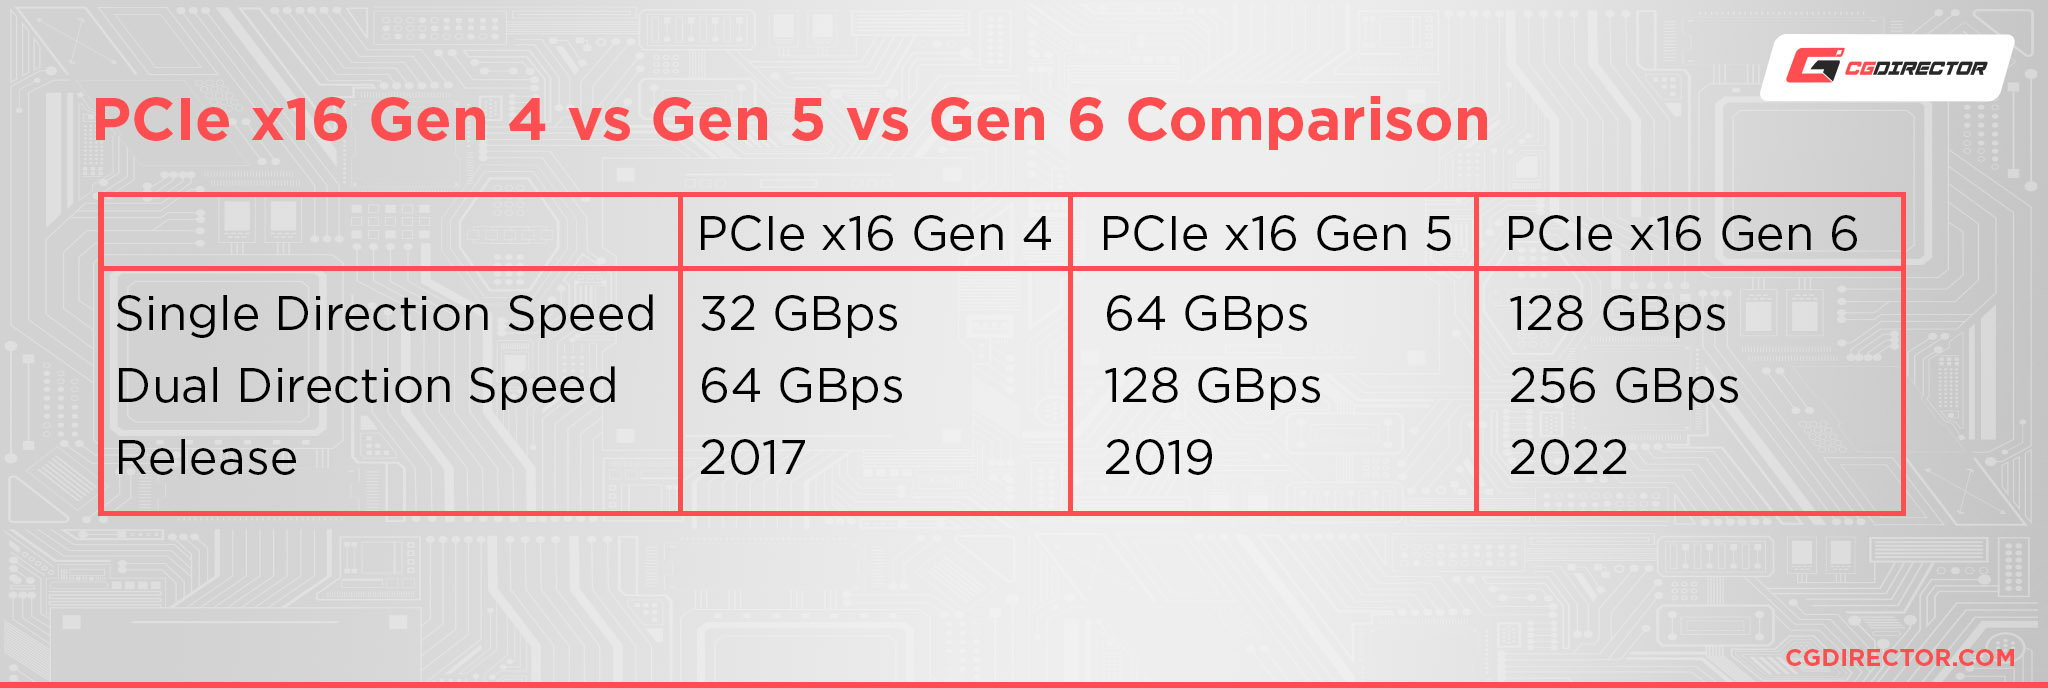 PCIe x16 Gen 4 vs Gen 5 vs Gen 6 Comparison